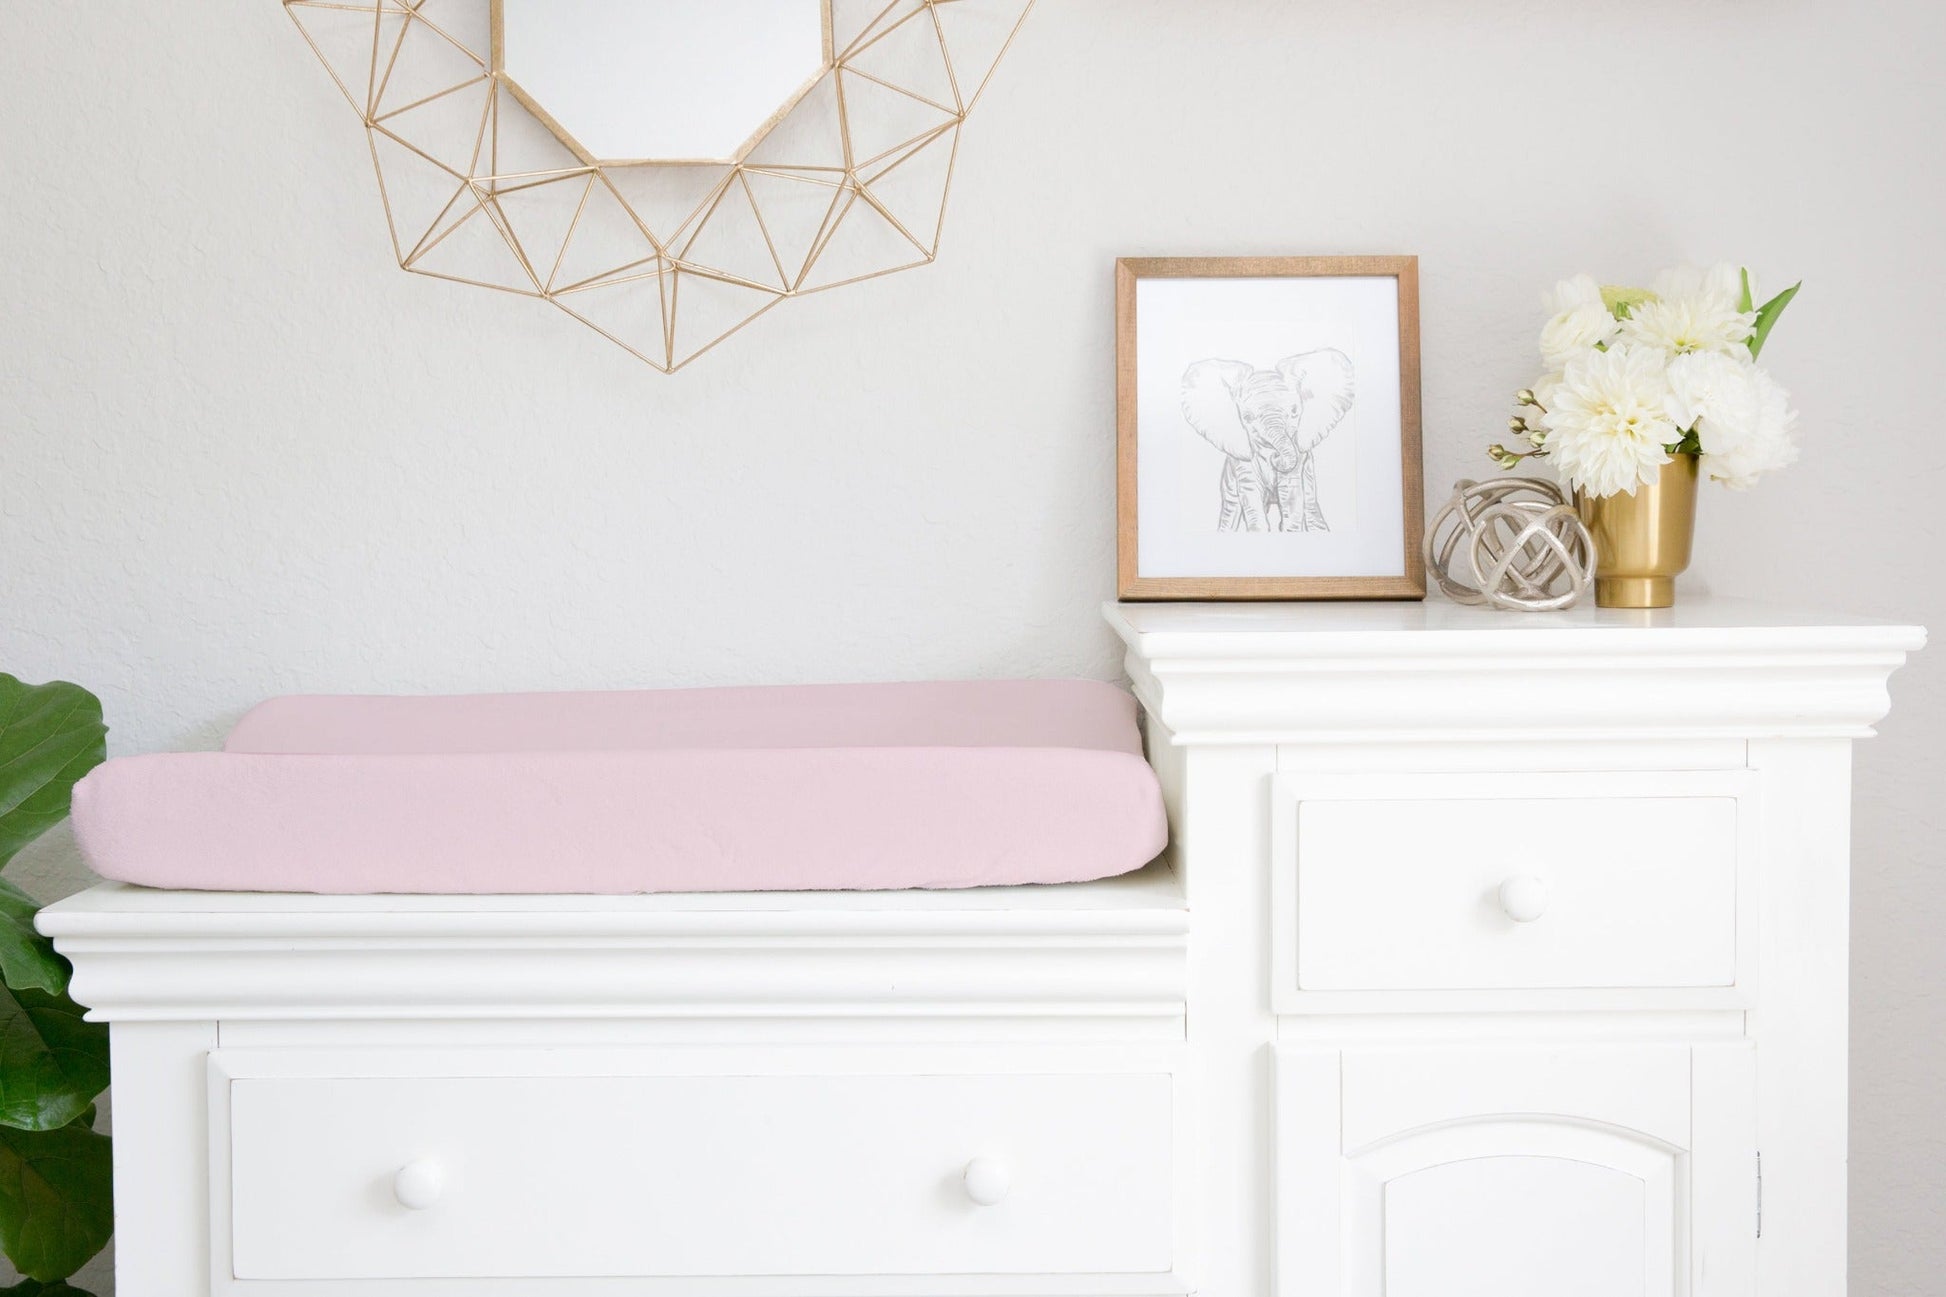 Light Pink Nursery Bedding, 2 - Piece Set - The Creative Raccoon